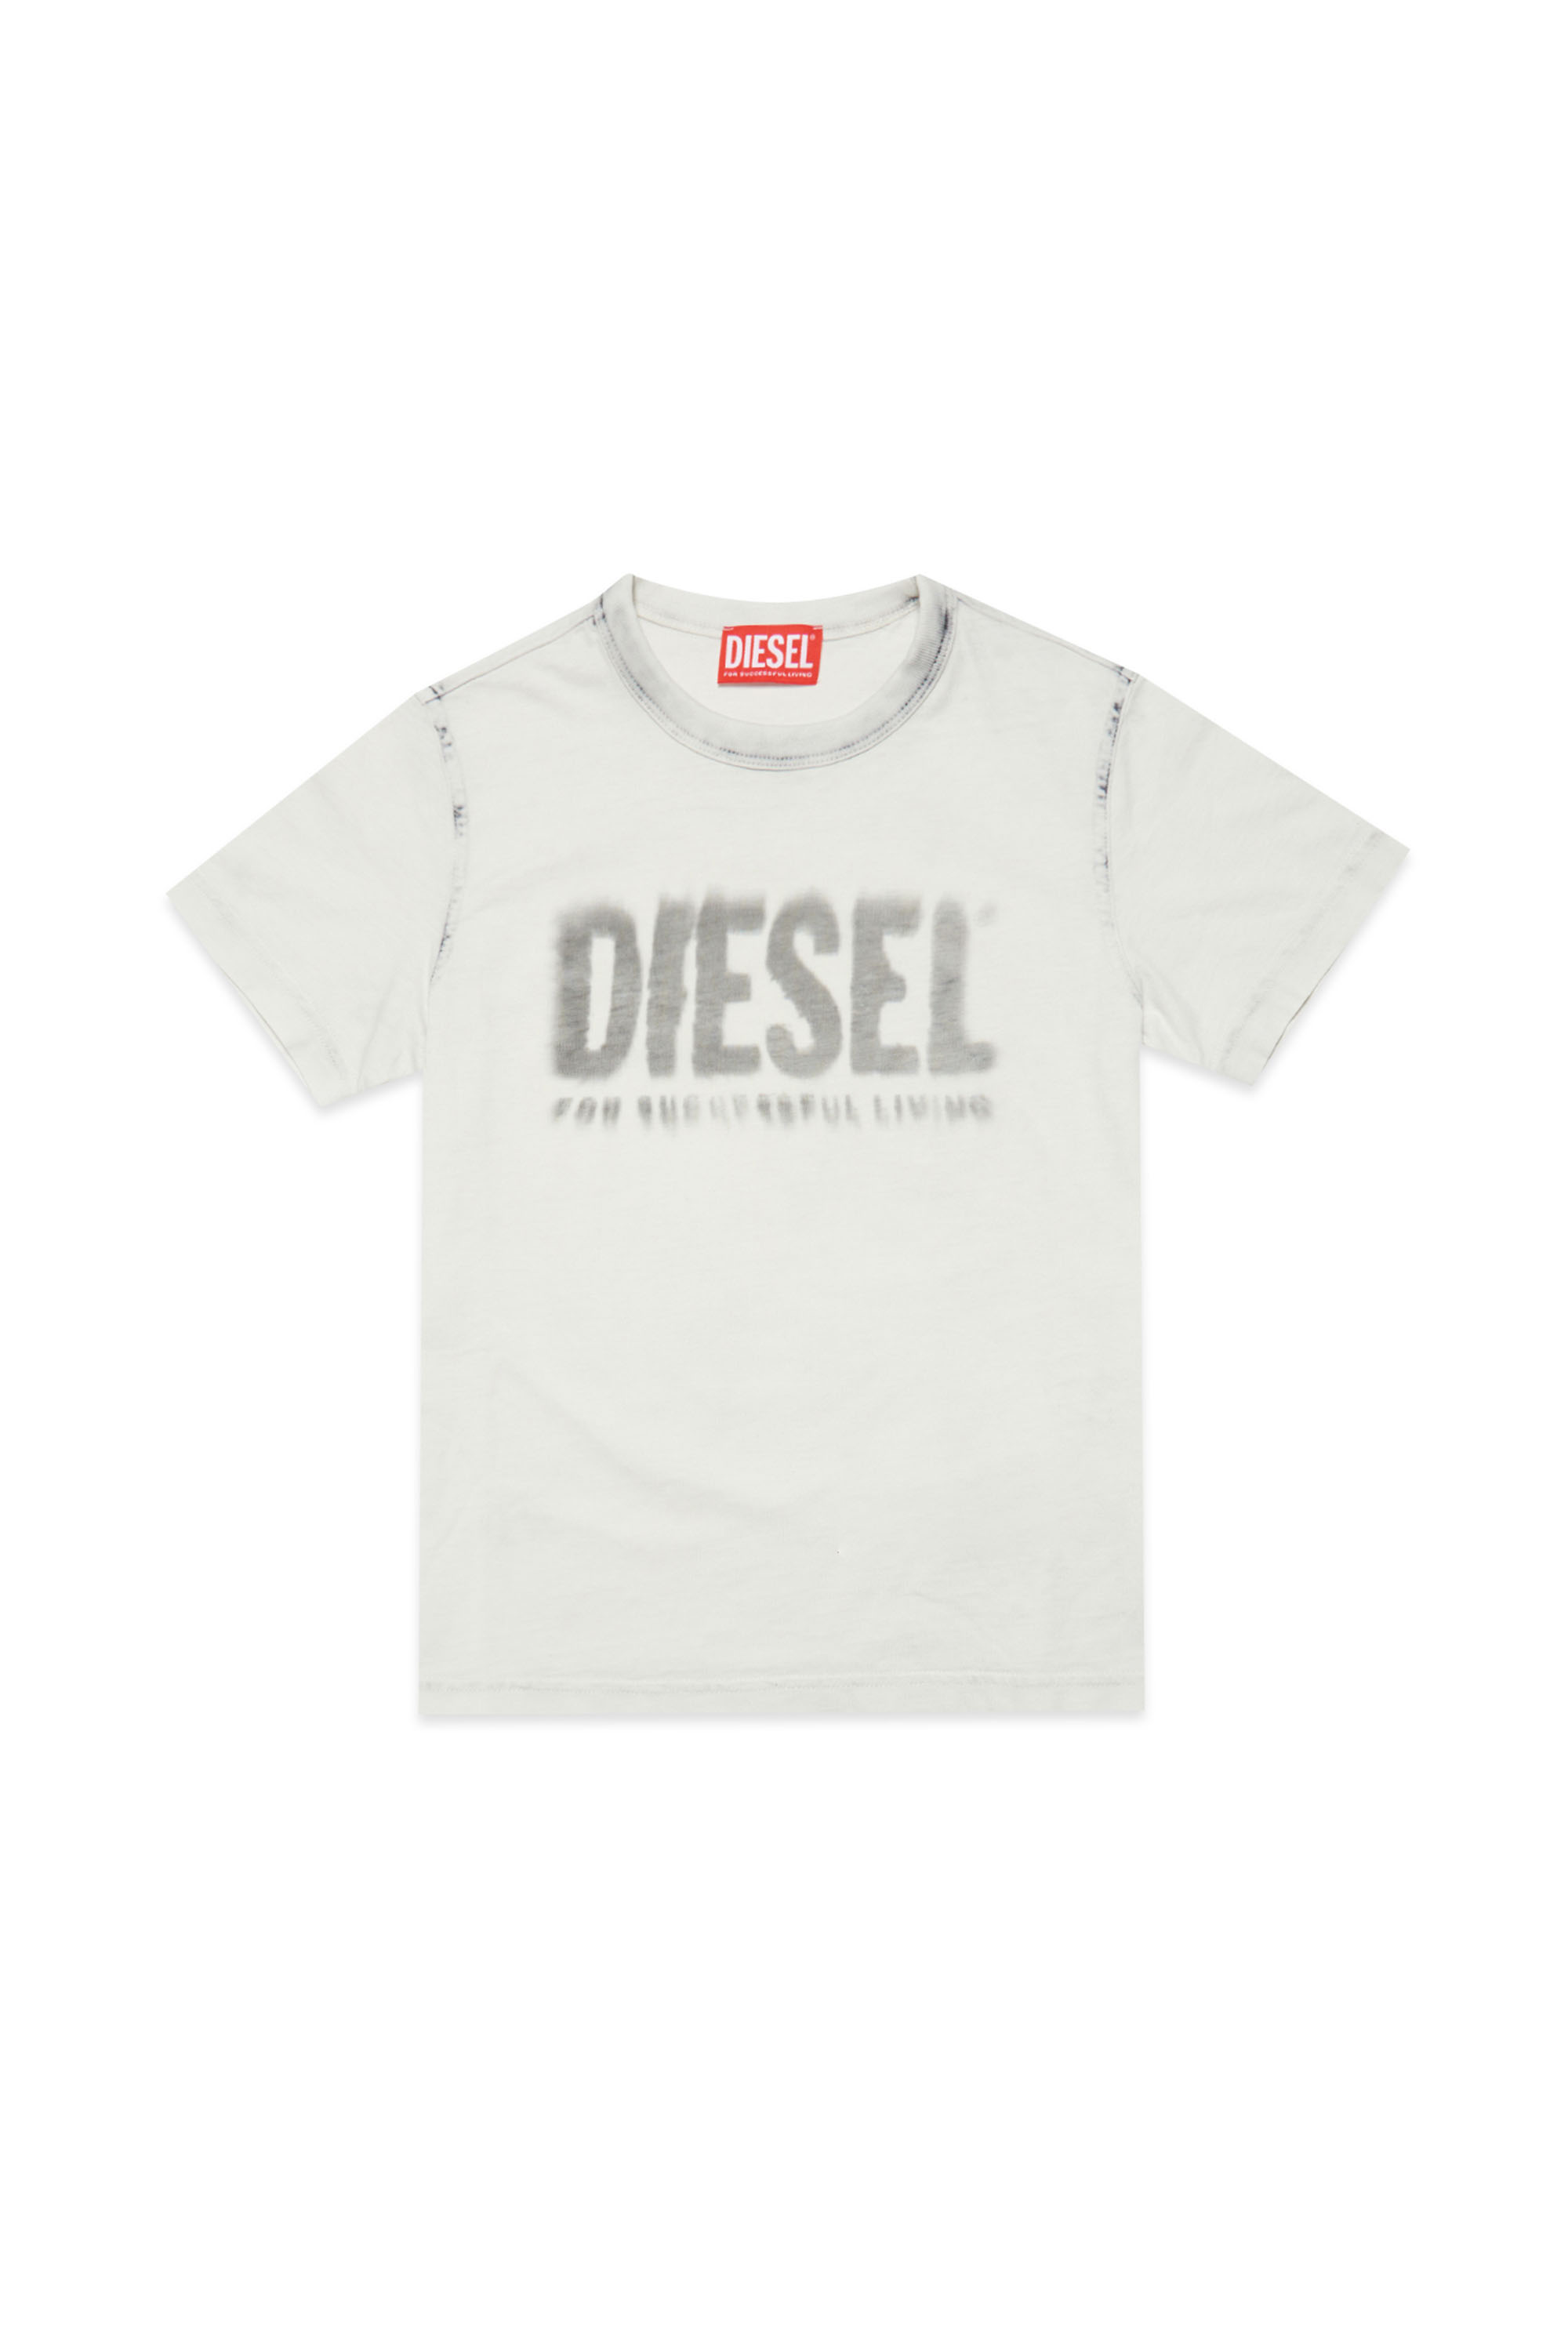 Diesel - TDIEGORE6, White/Grey - Image 1